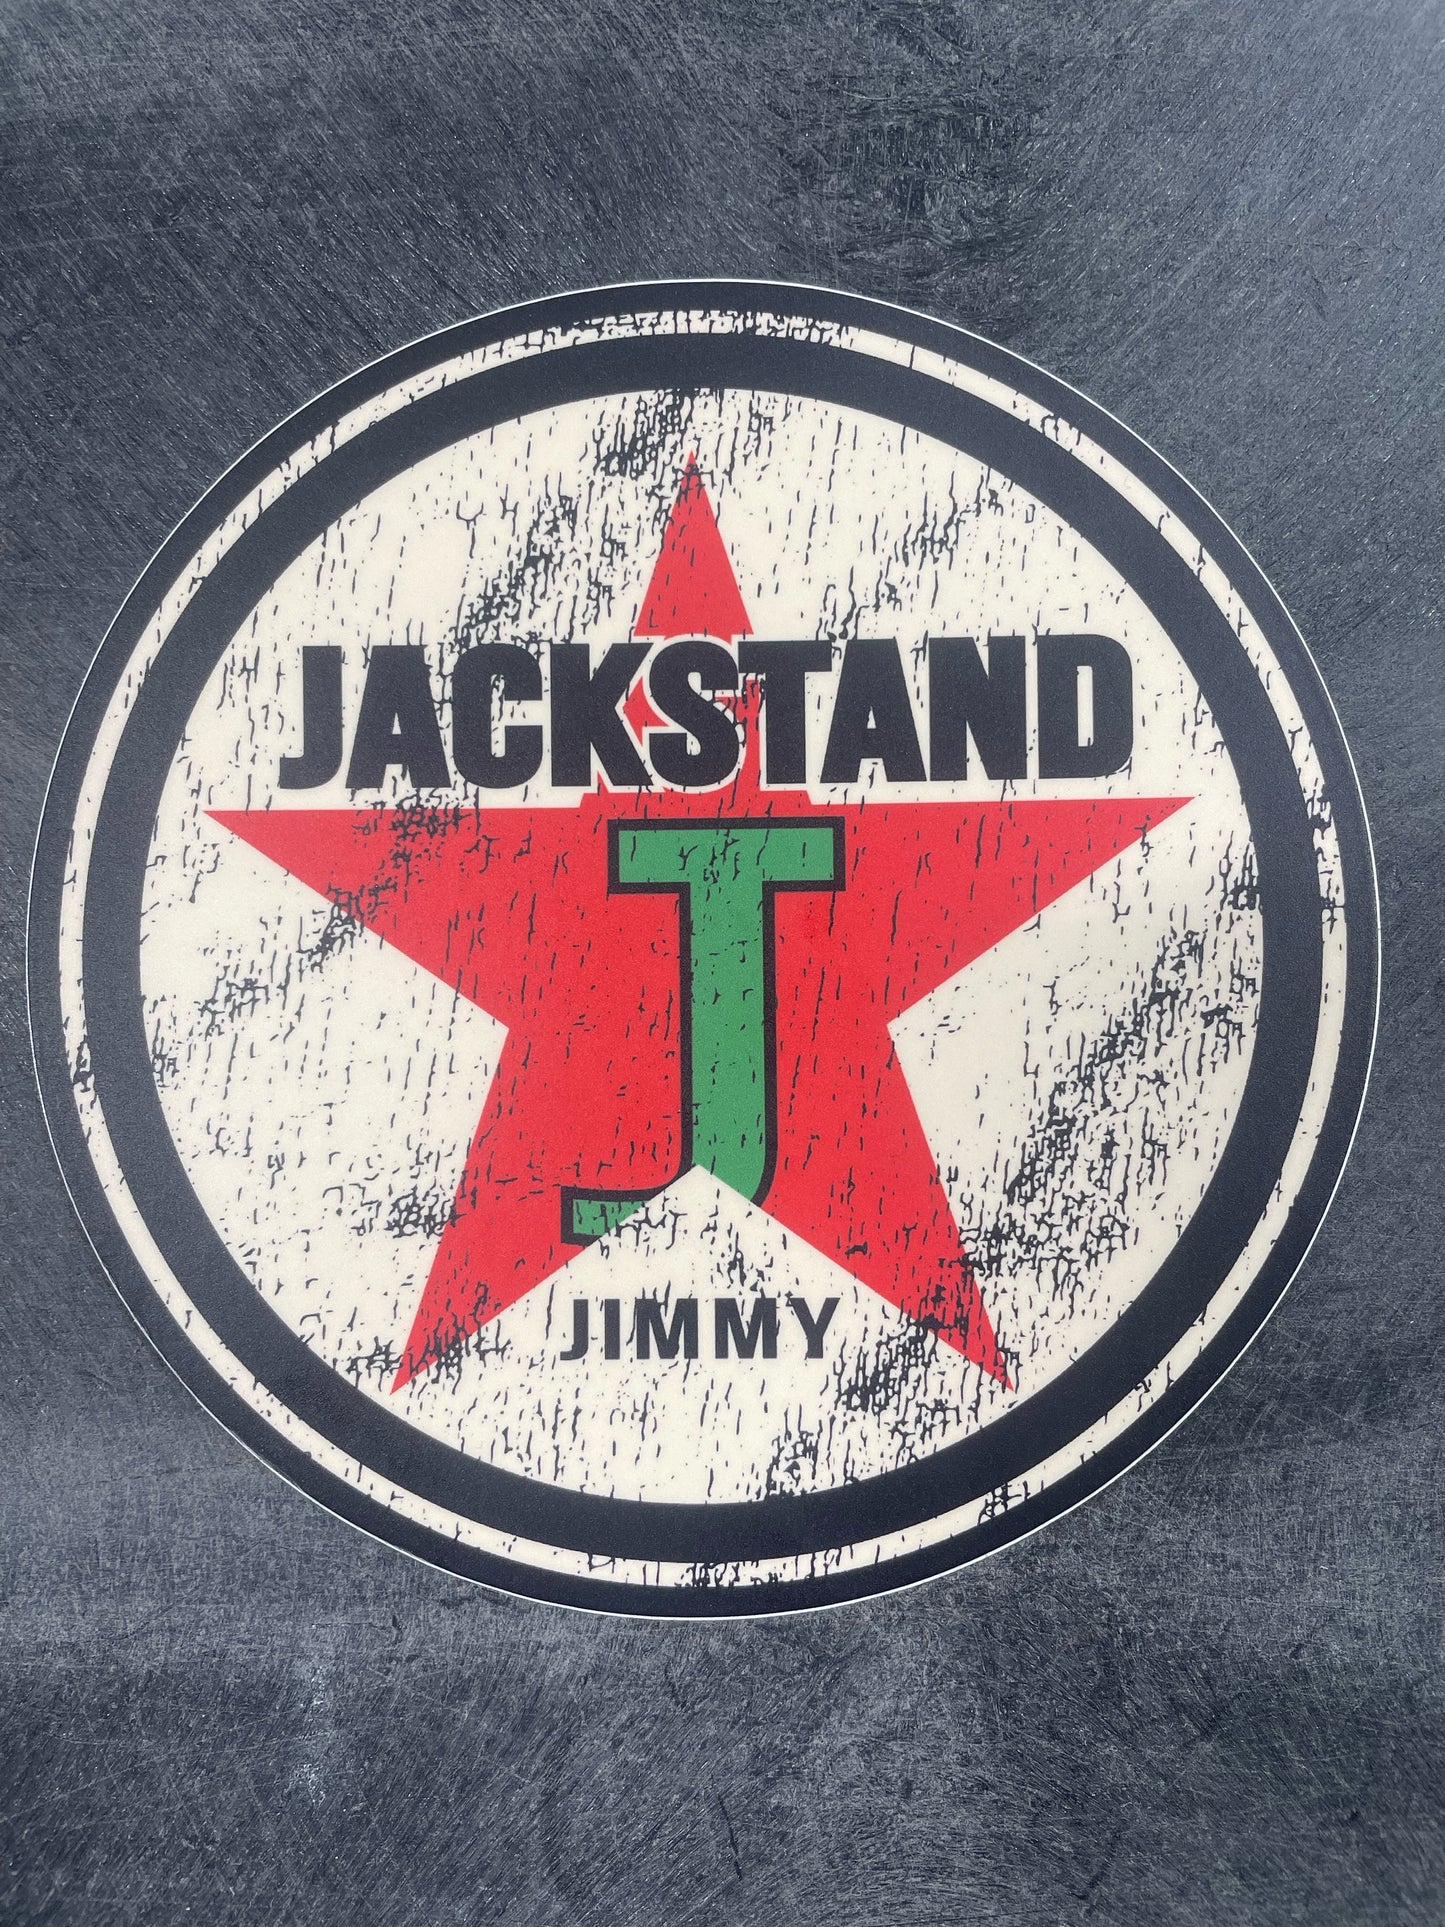 Jackstand Jimmy's Name Sticker